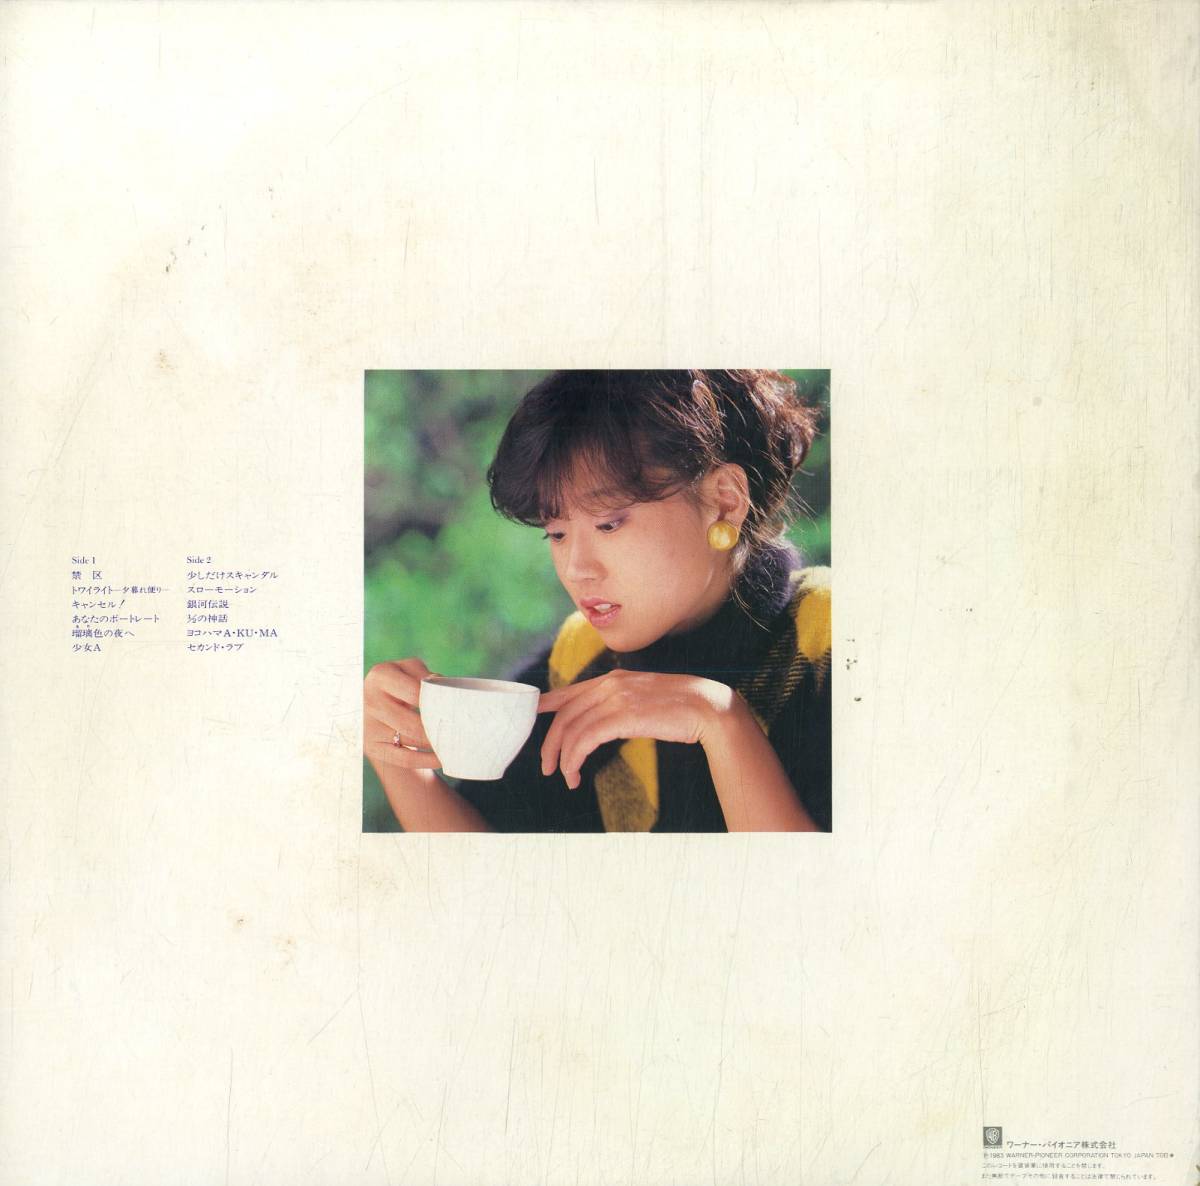 A00554895/LP/中森明菜「Best Akina メモワール (1983年・L-12590